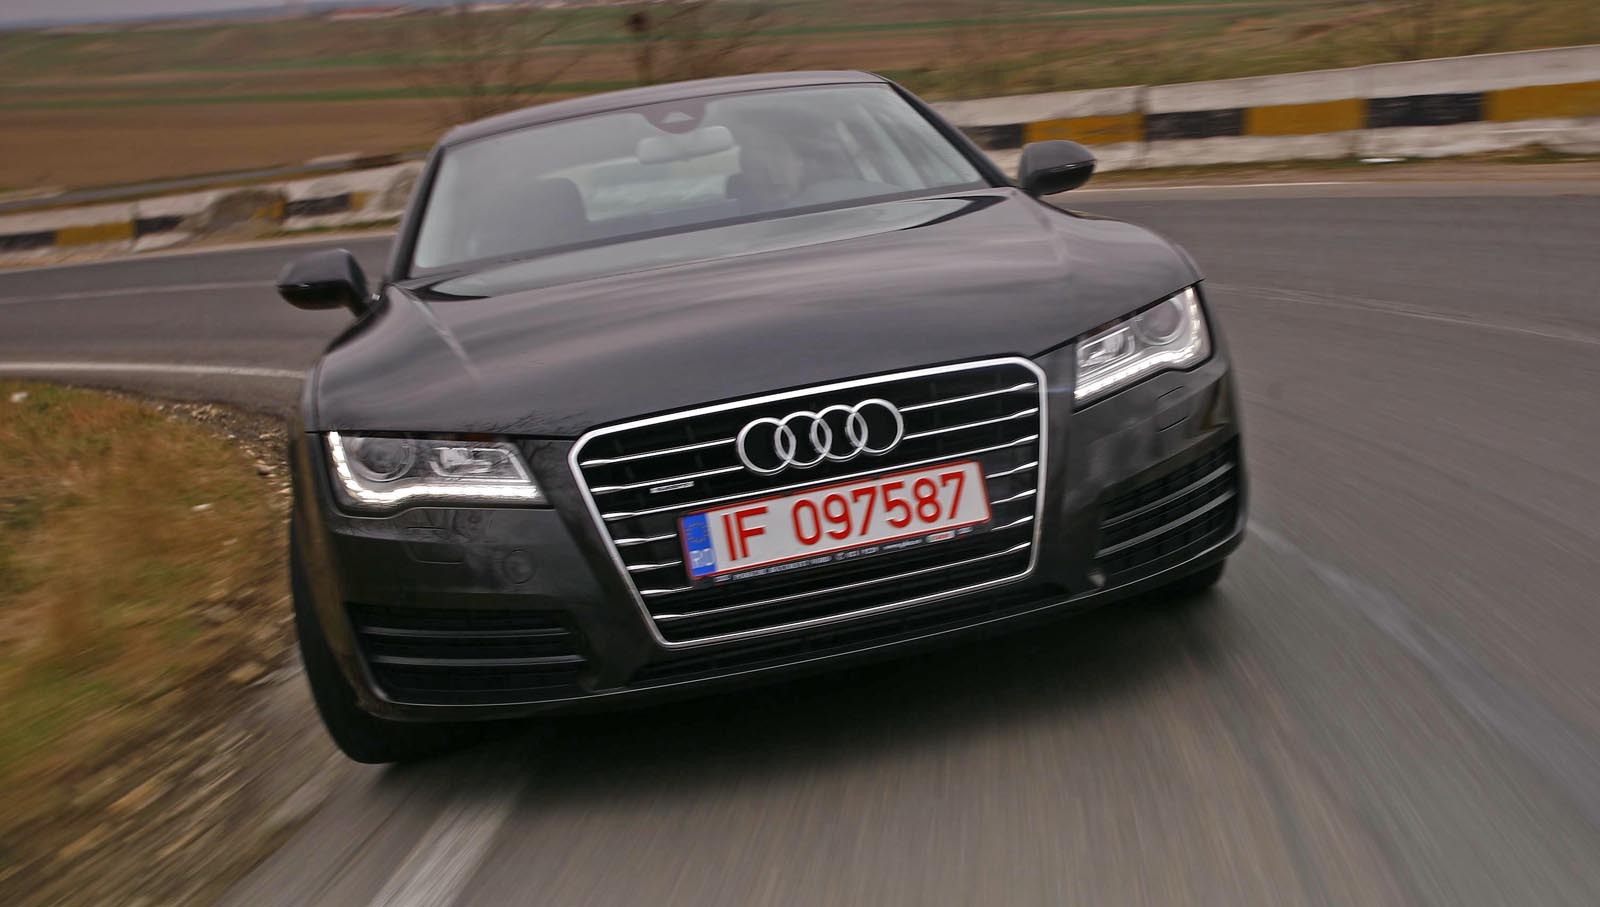 Stabilitate excelenta in curbe pentru Audi A7, gratie sistemului quattro avansat